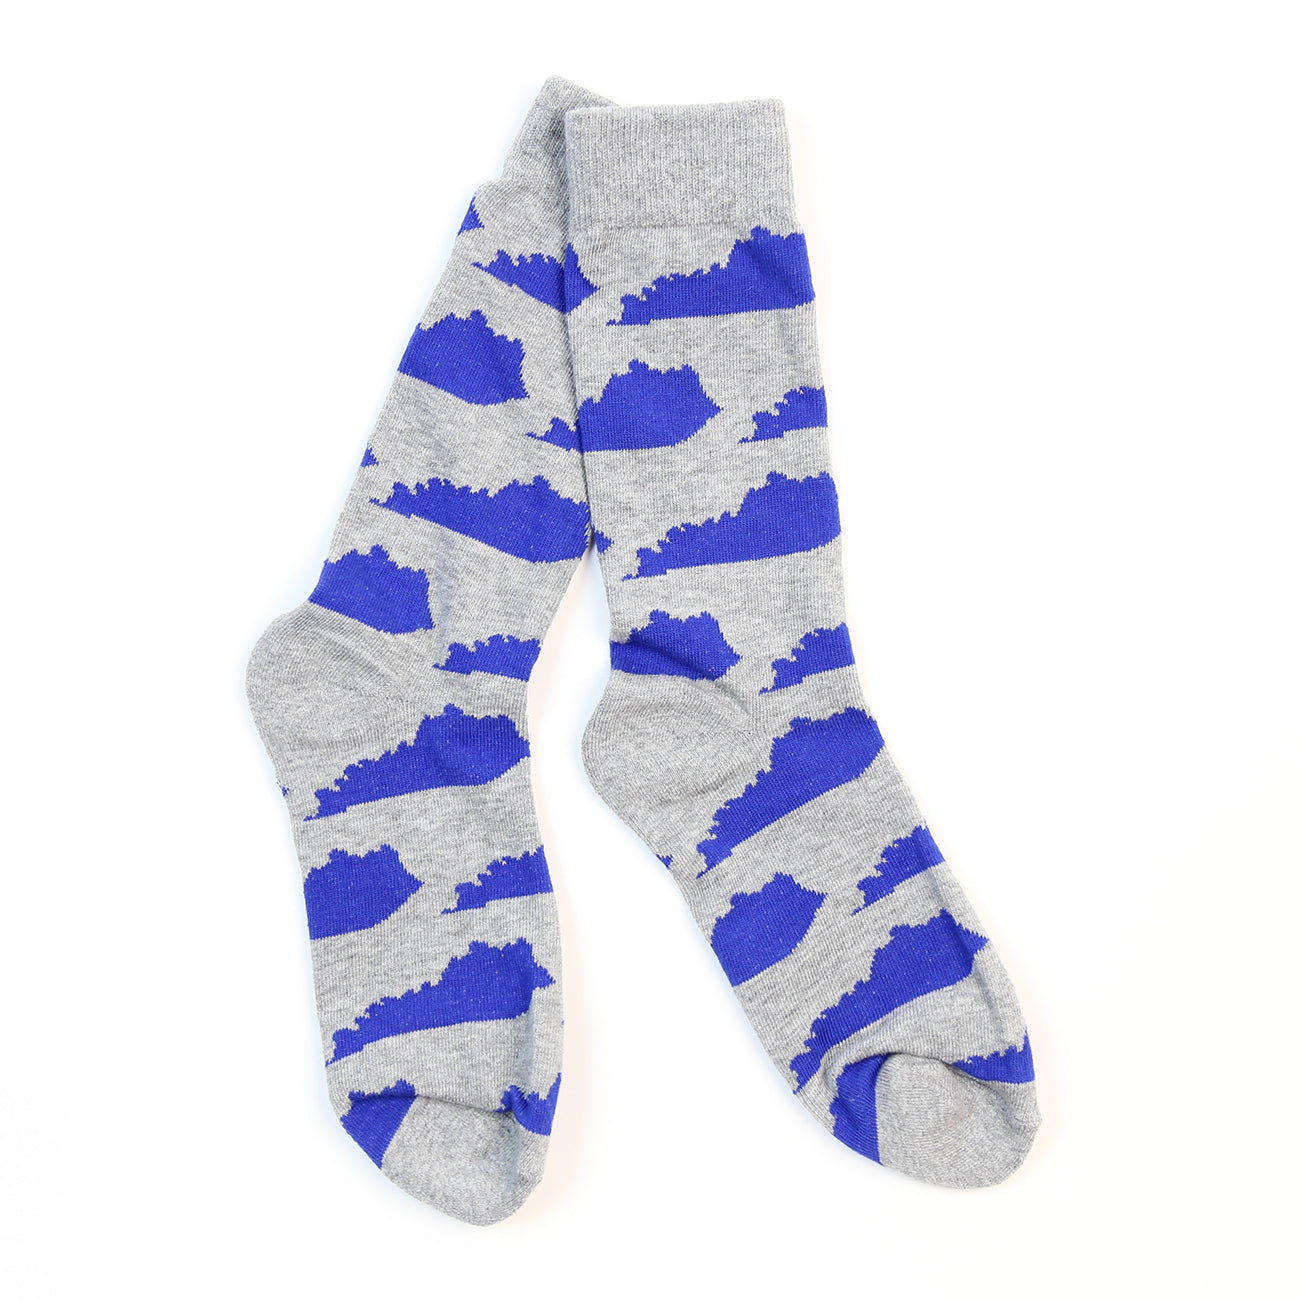 KY Shape Socks (Grey and Blue)-Socks-KY for KY Store